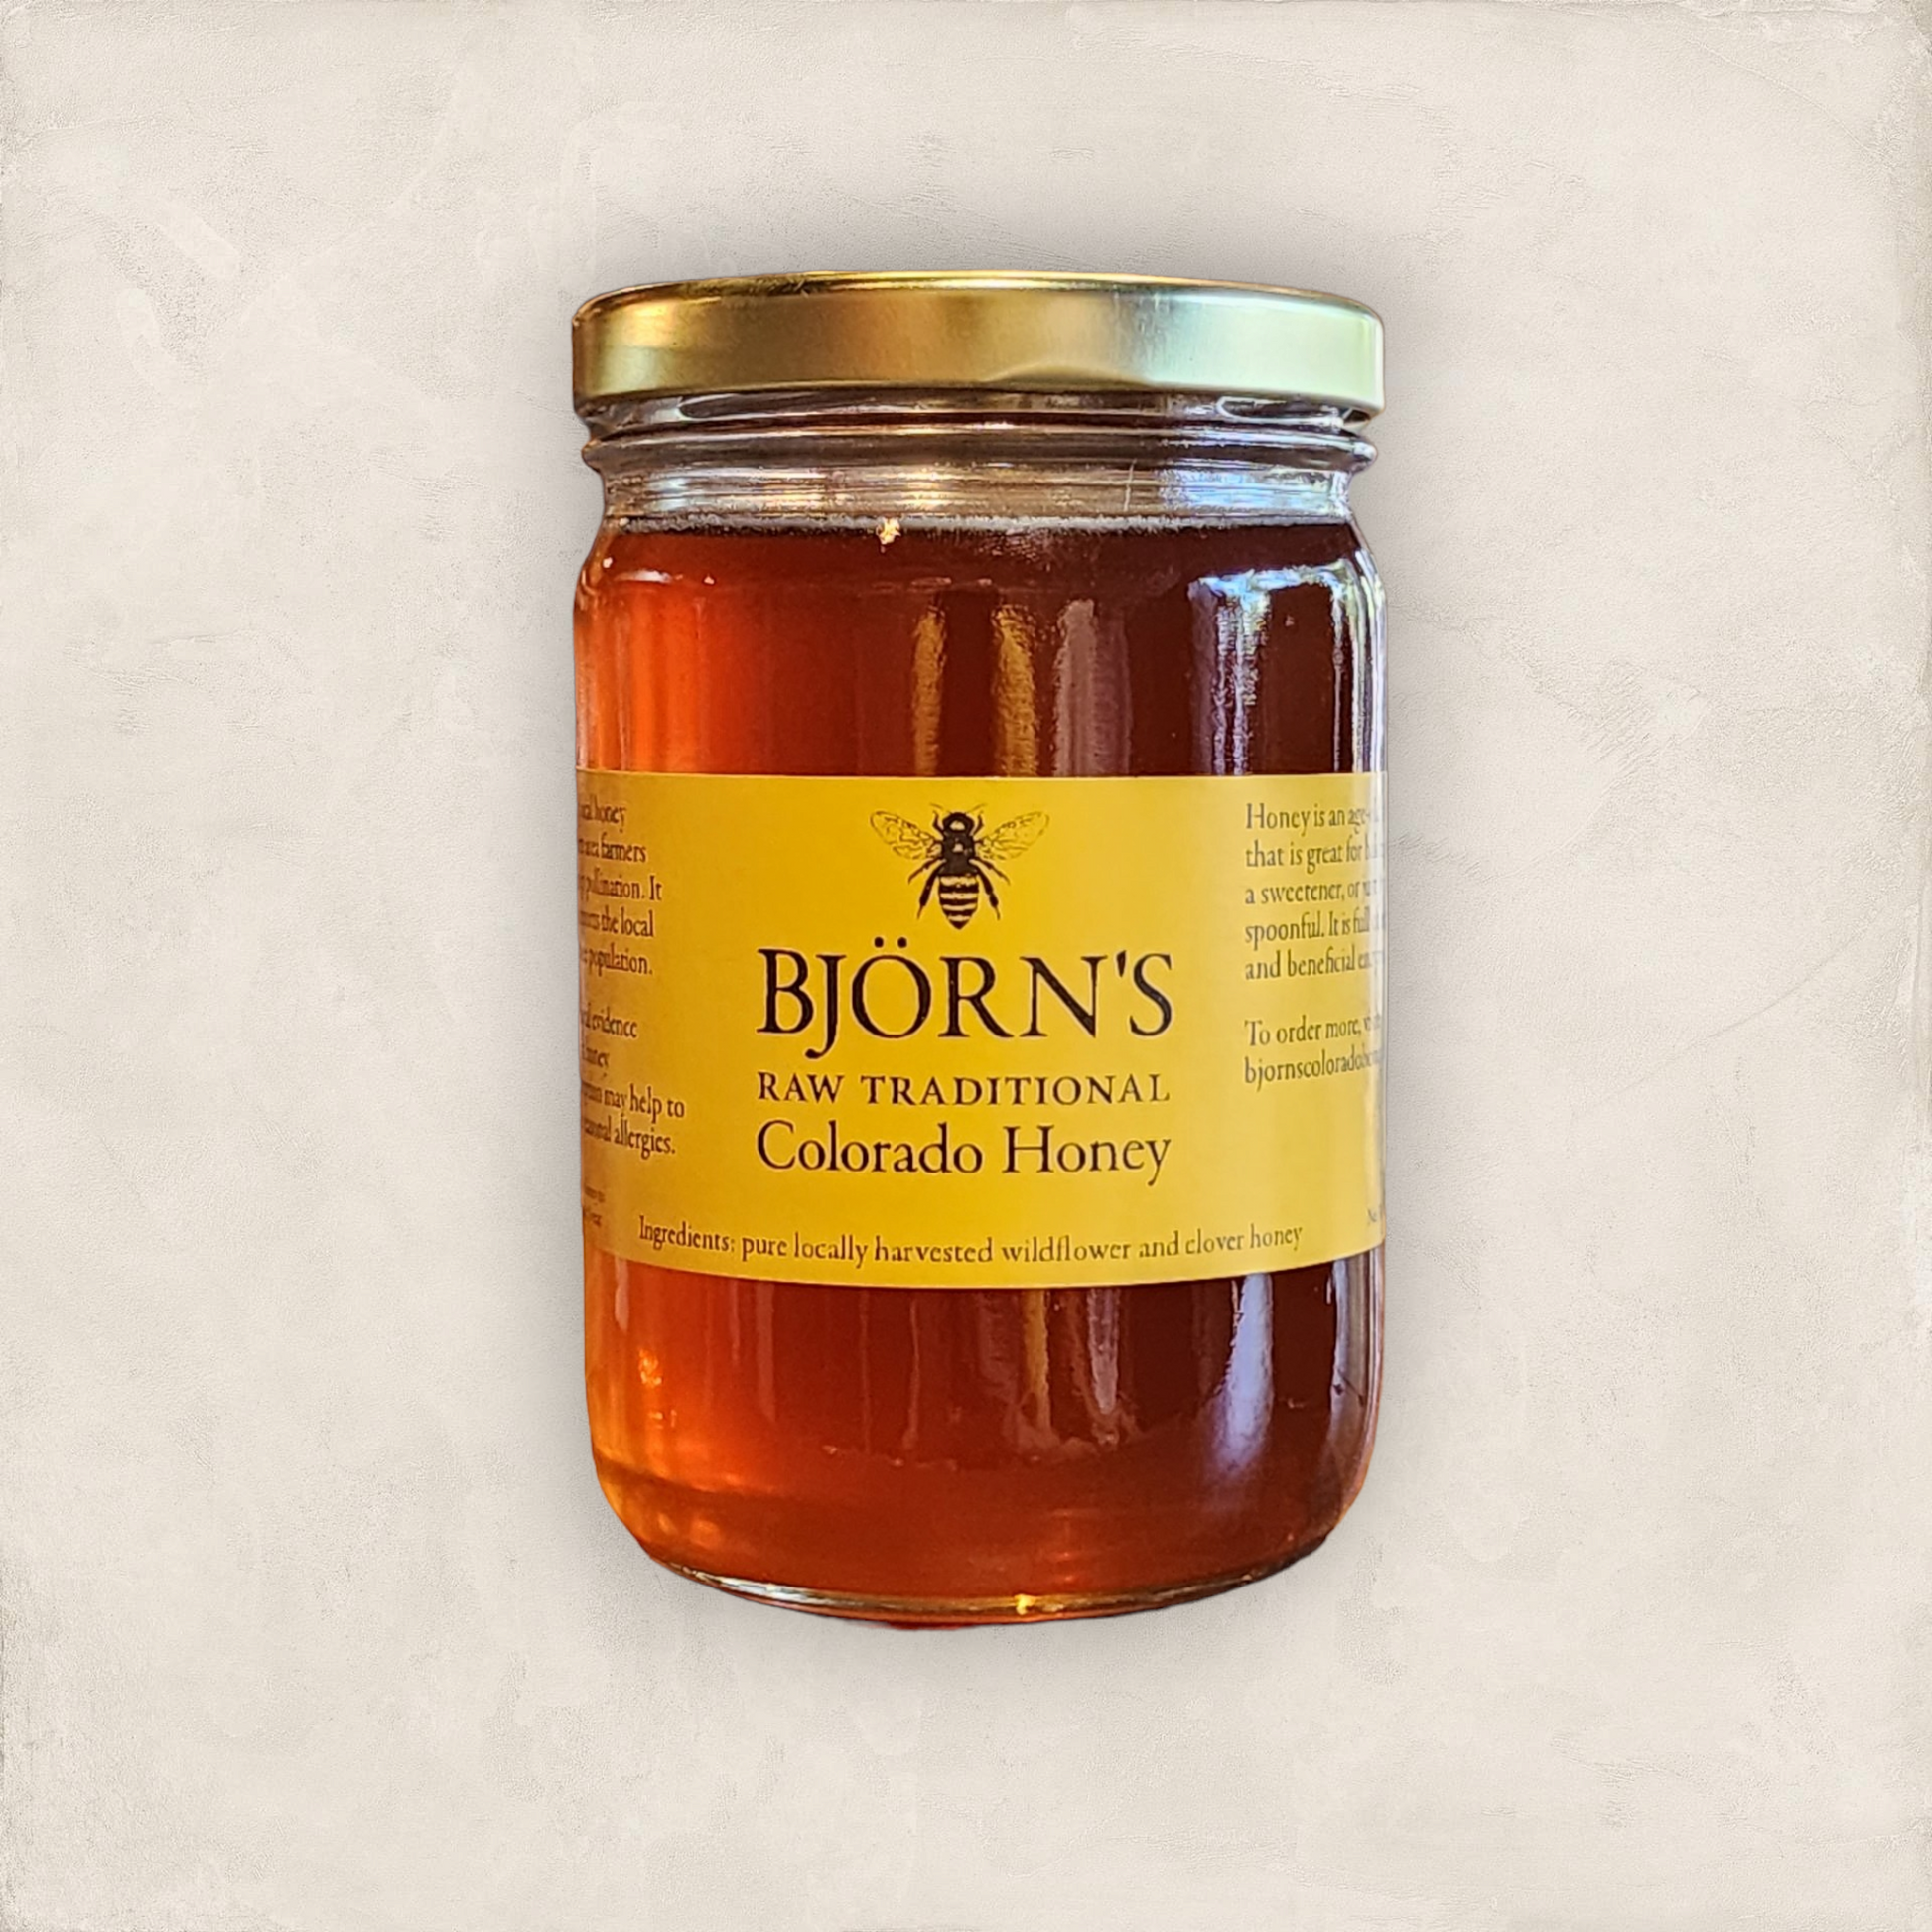 Björn's Royal Honey – Björn's Colorado Honey